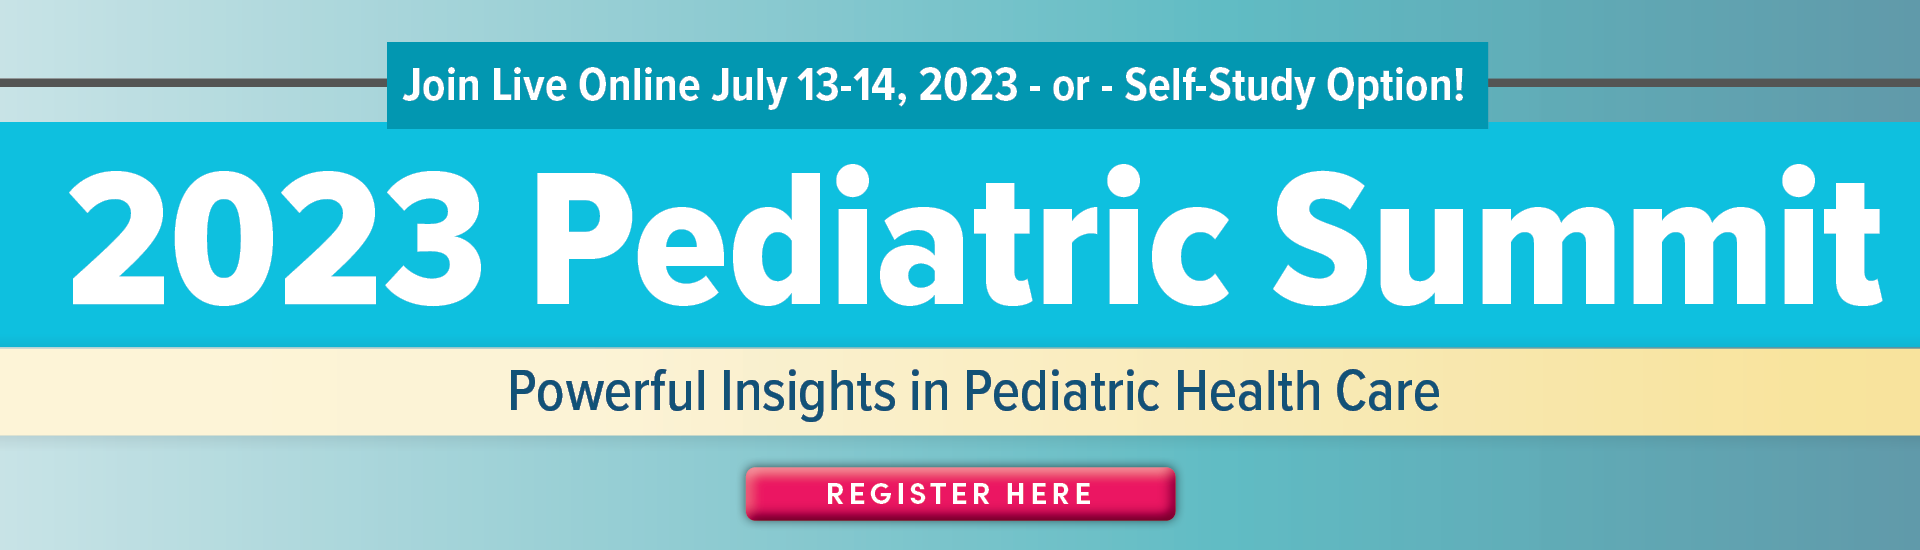 2023 Pediatric Summit: Powerful Insights in Pediatric Health Care